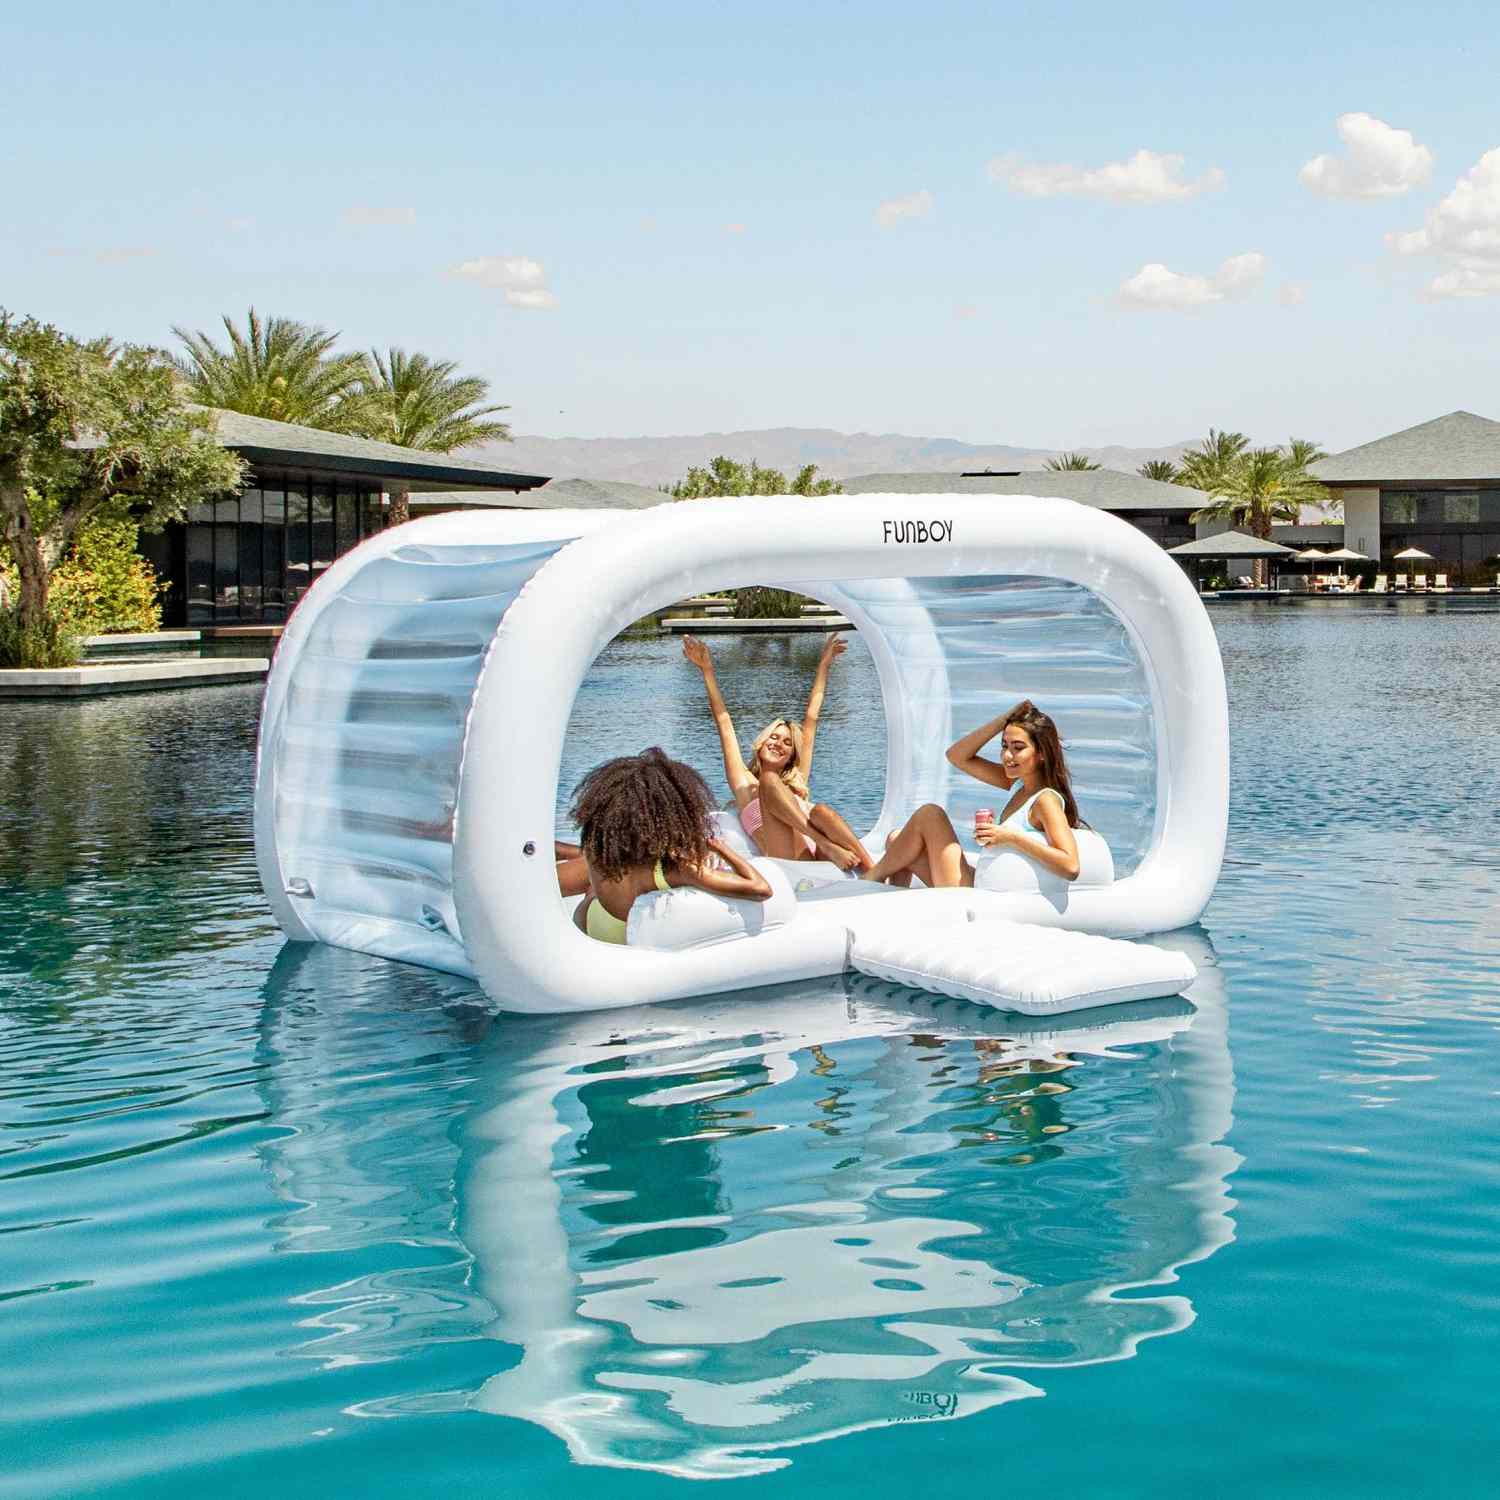 The Best Pool Design Ideas for Your Backyard | Martha Stewart